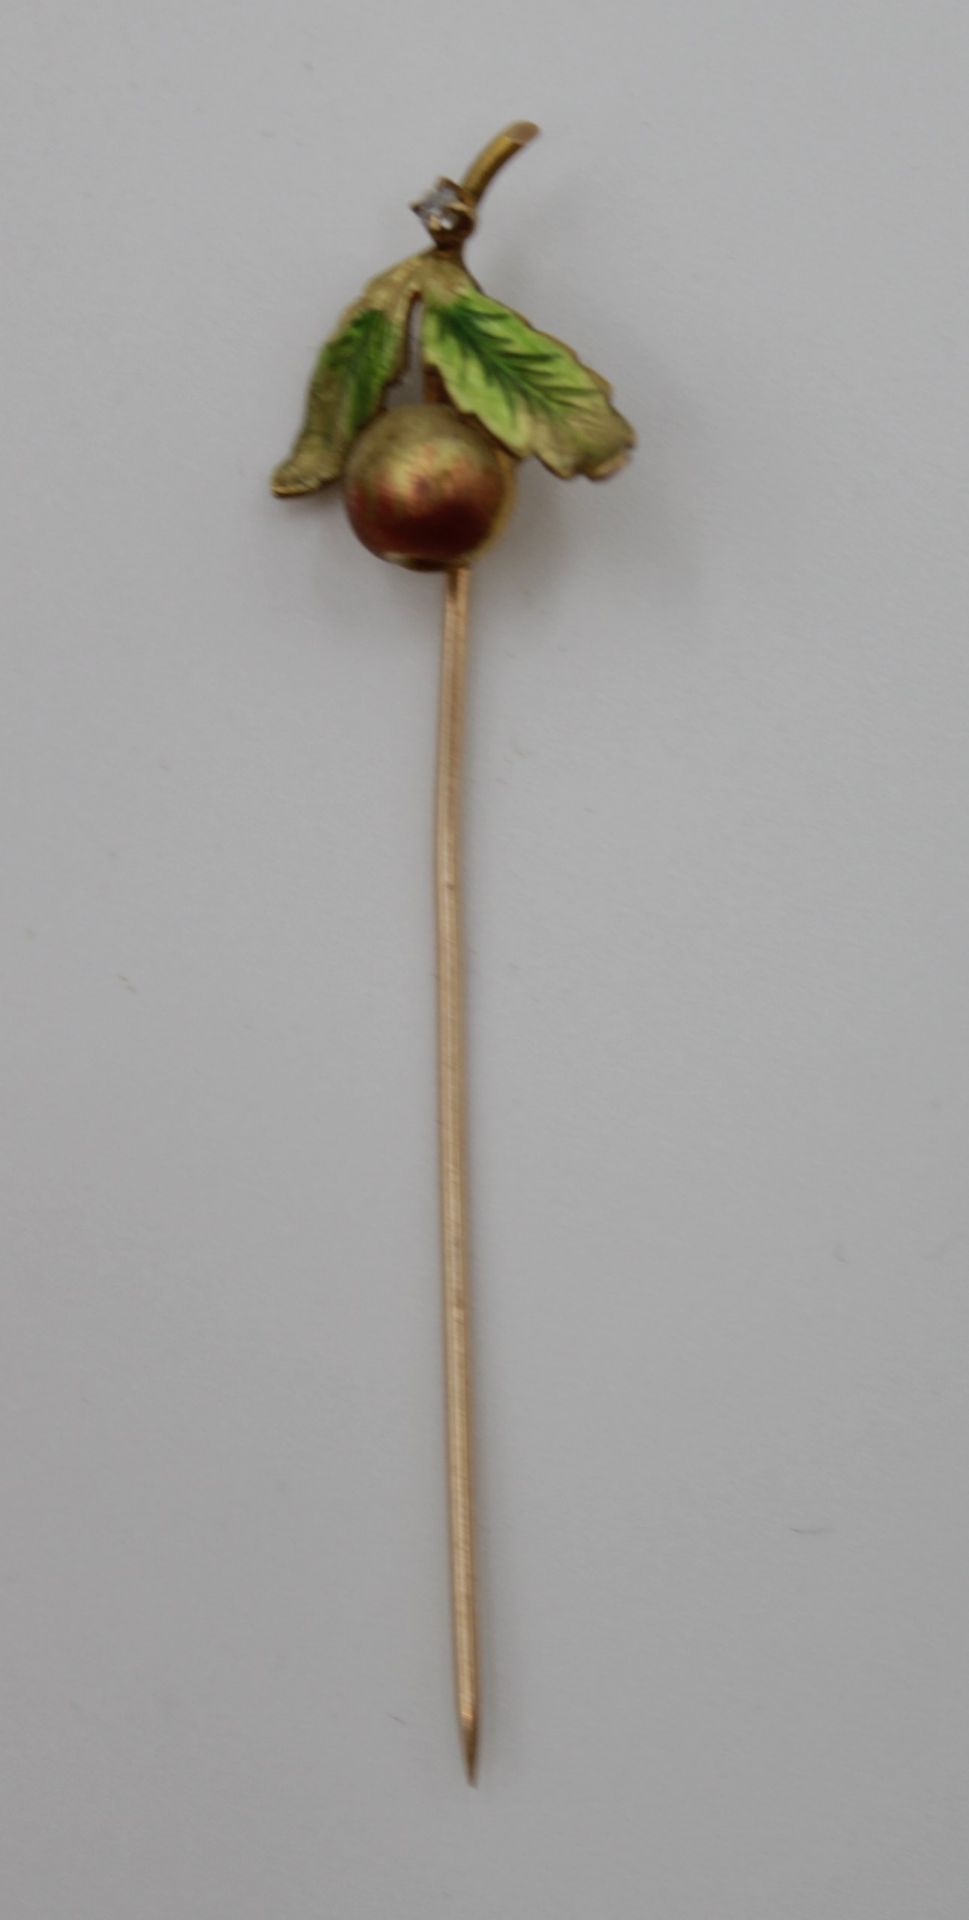 Nadel, 333er GG, Apfel, kl. klarer Stein, 1,1gr, L-5,5cm. - Bild 2 aus 6